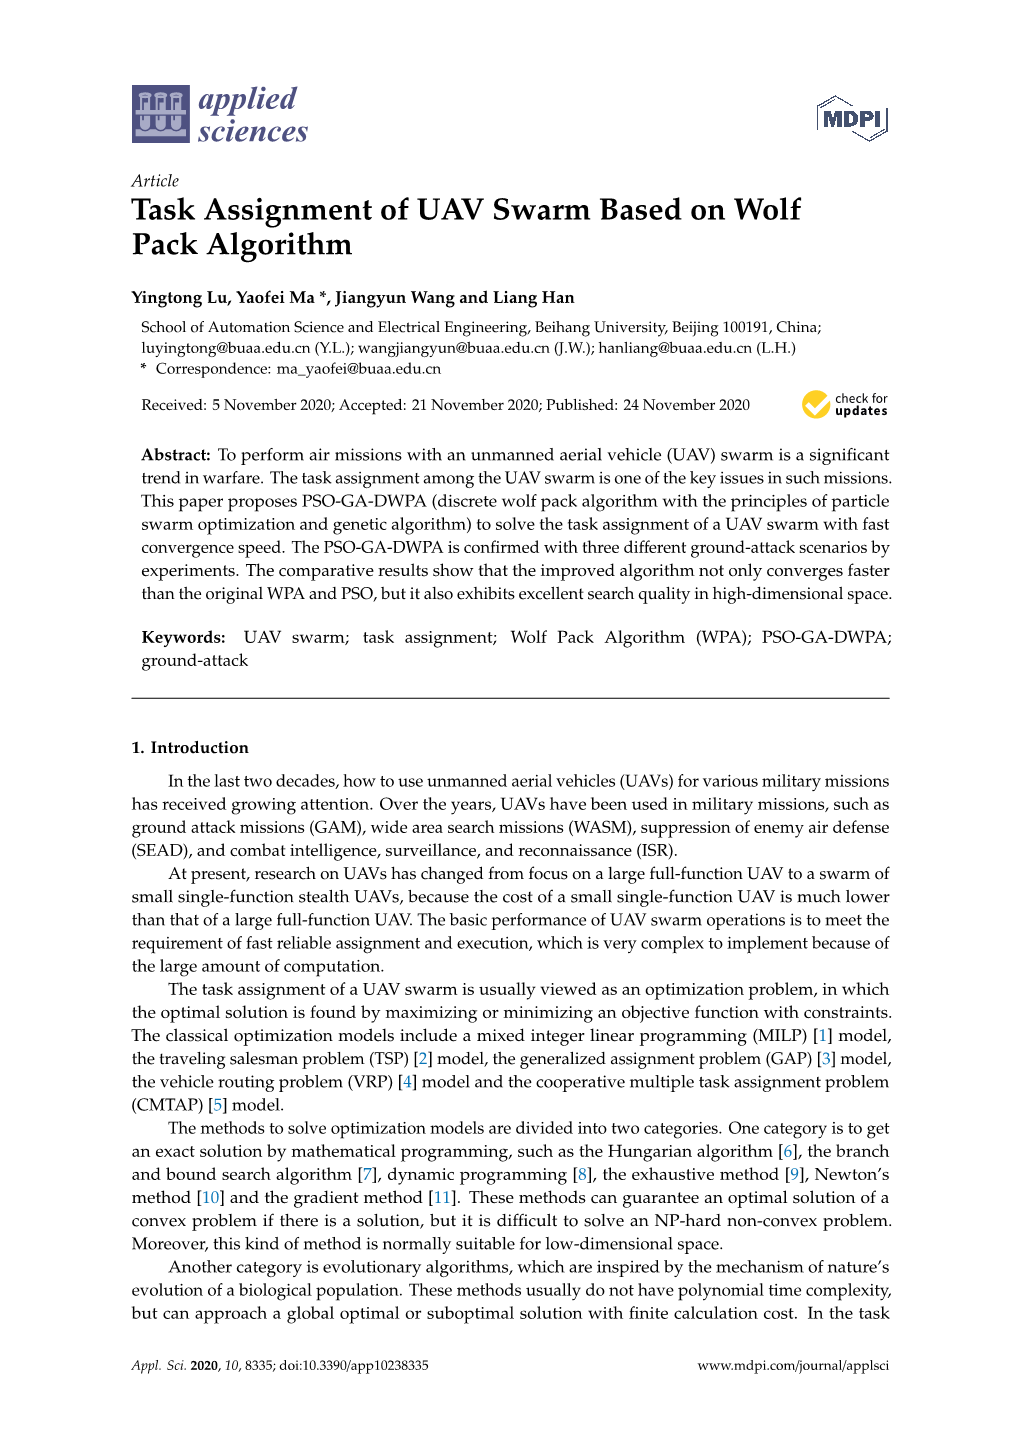 Task Assignment of UAV Swarm Based on Wolf Pack Algorithm